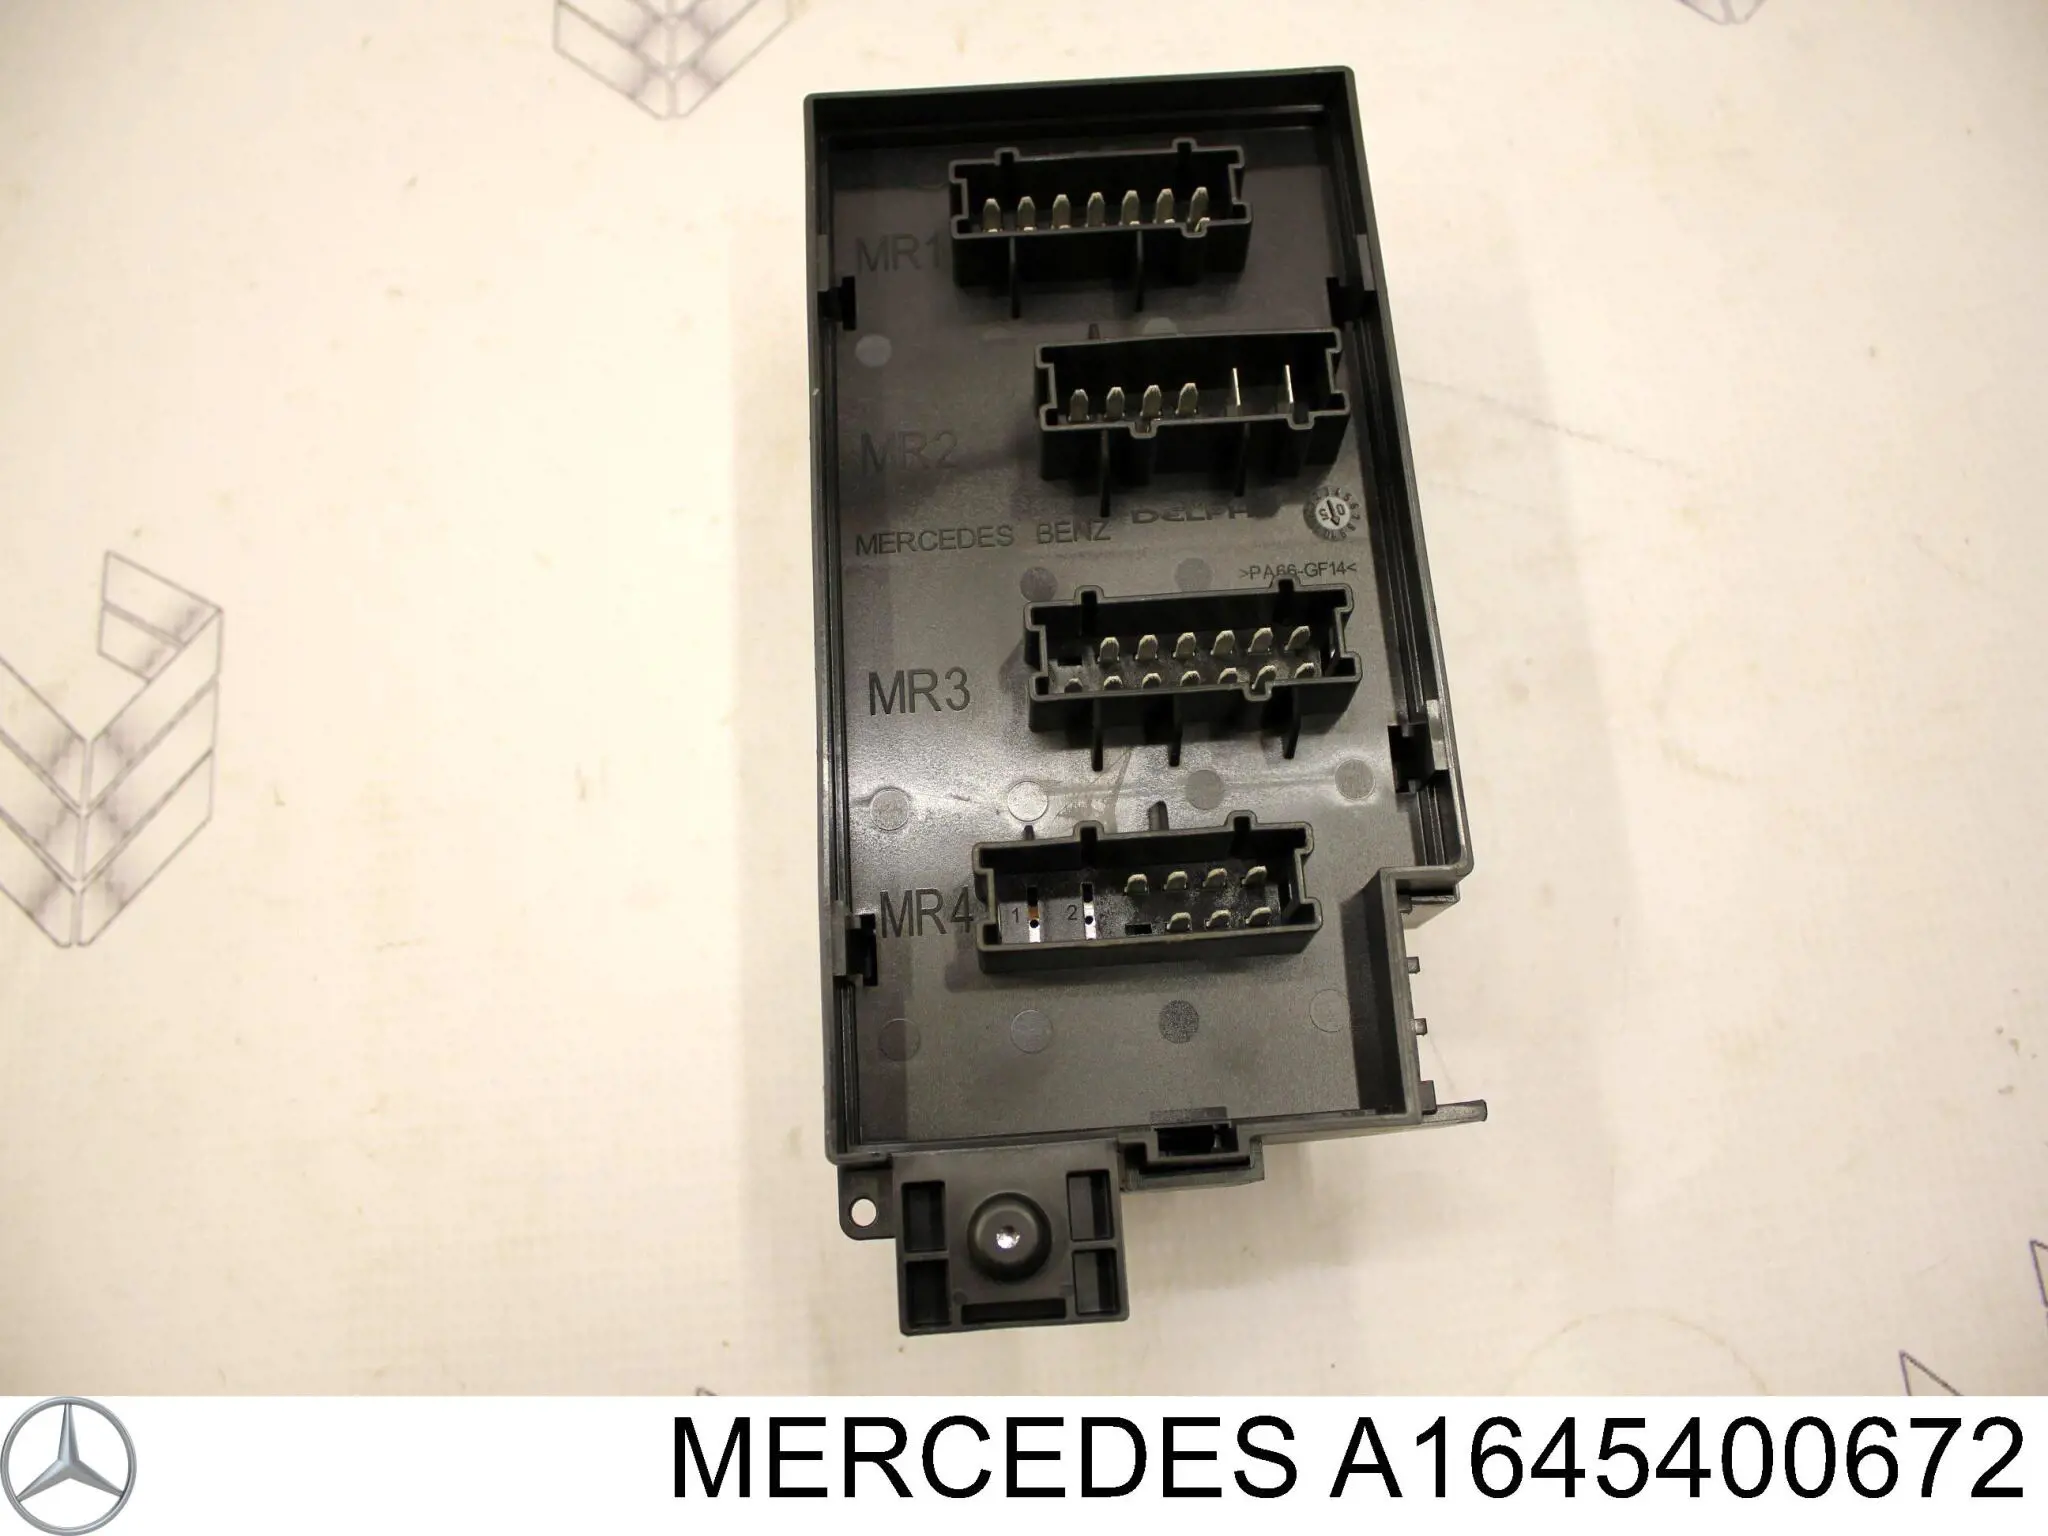 A1645400672 Mercedes unidade de dispositivos de segurança